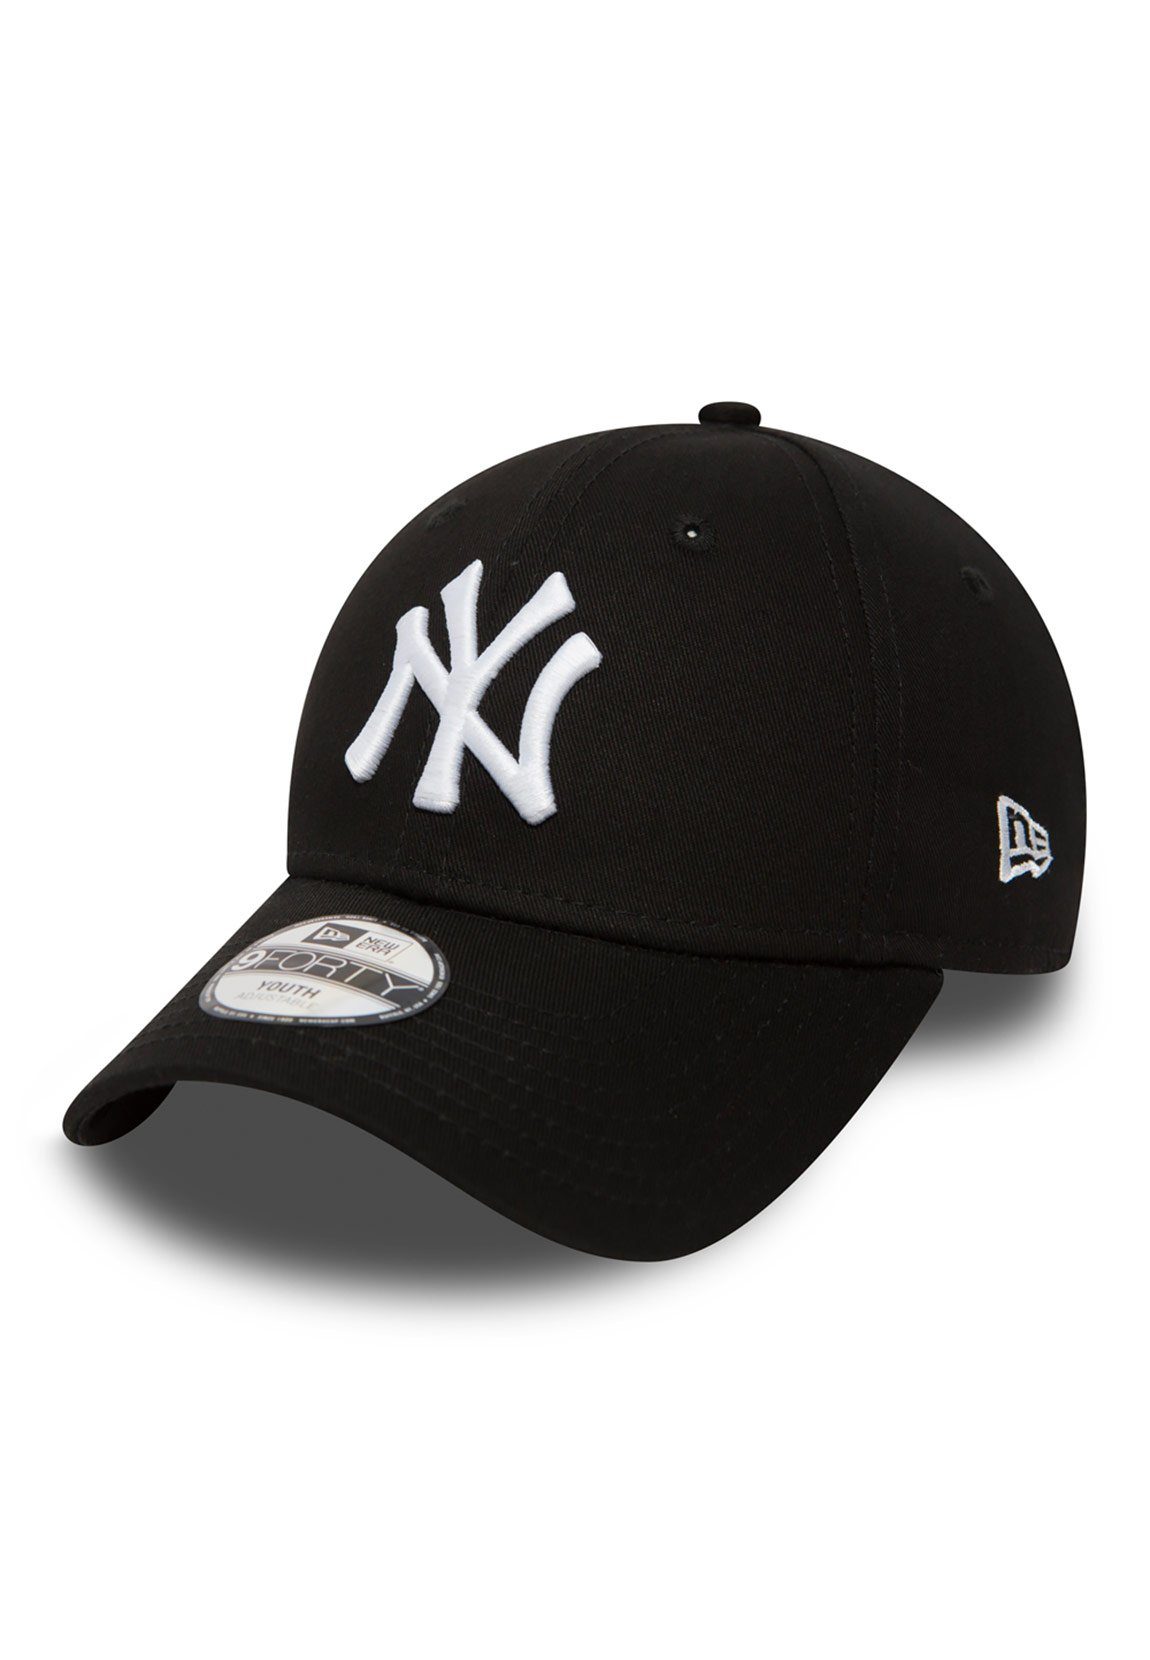 New New schwarz-weiß NY Era - Kids Cap - Adjustables Black-White Cap Baseball Era YANKEES